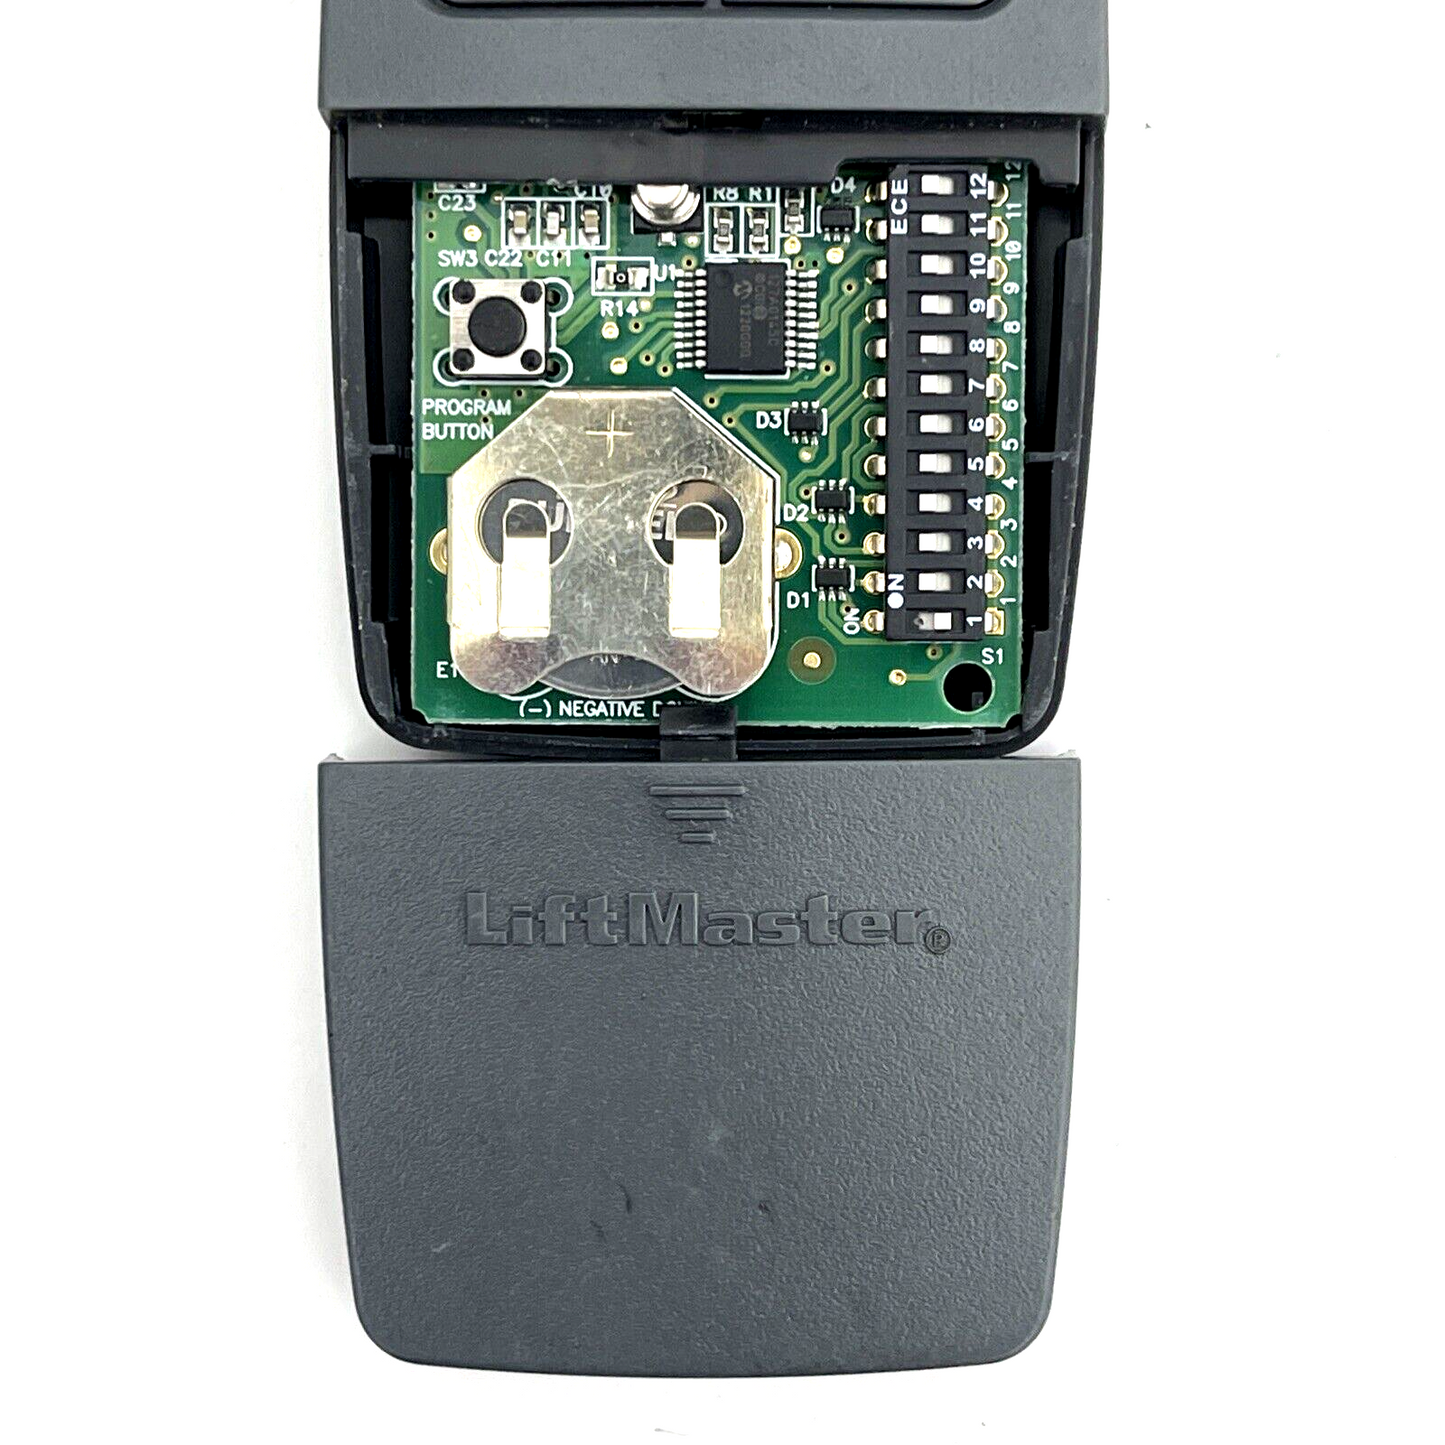 LiftMaster OEM 375LM Universal Garage Door 2 Button Remote Control Major Brands